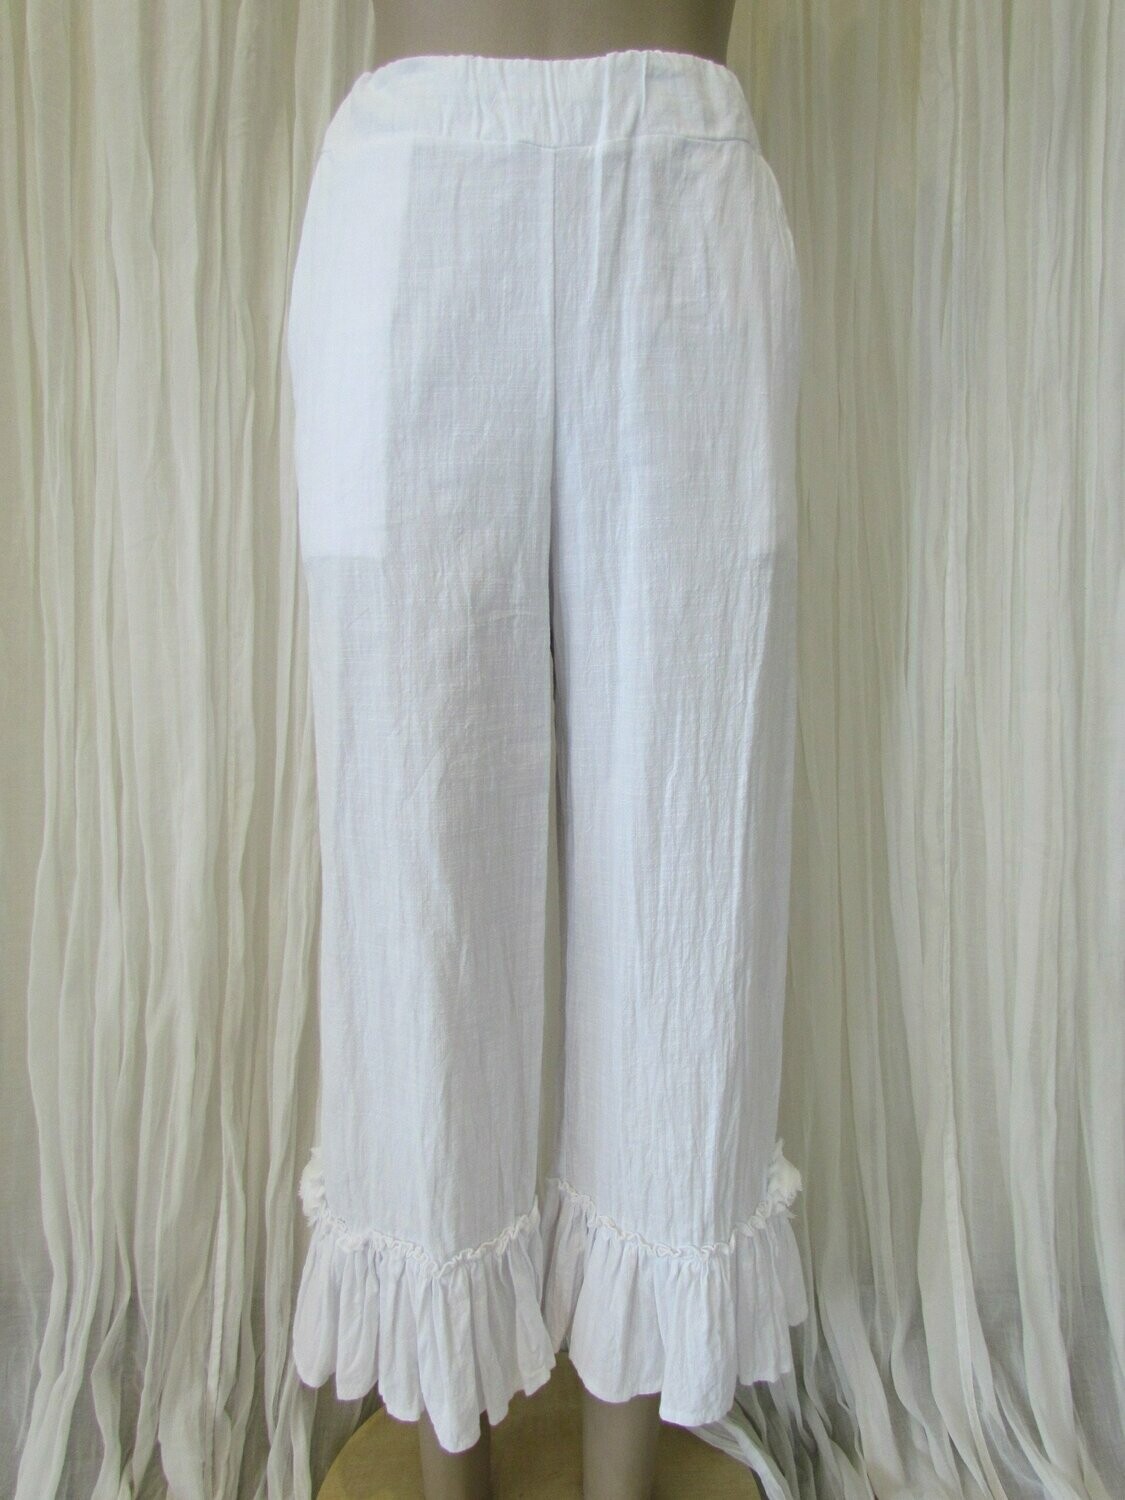 White Frill Cotton Pants